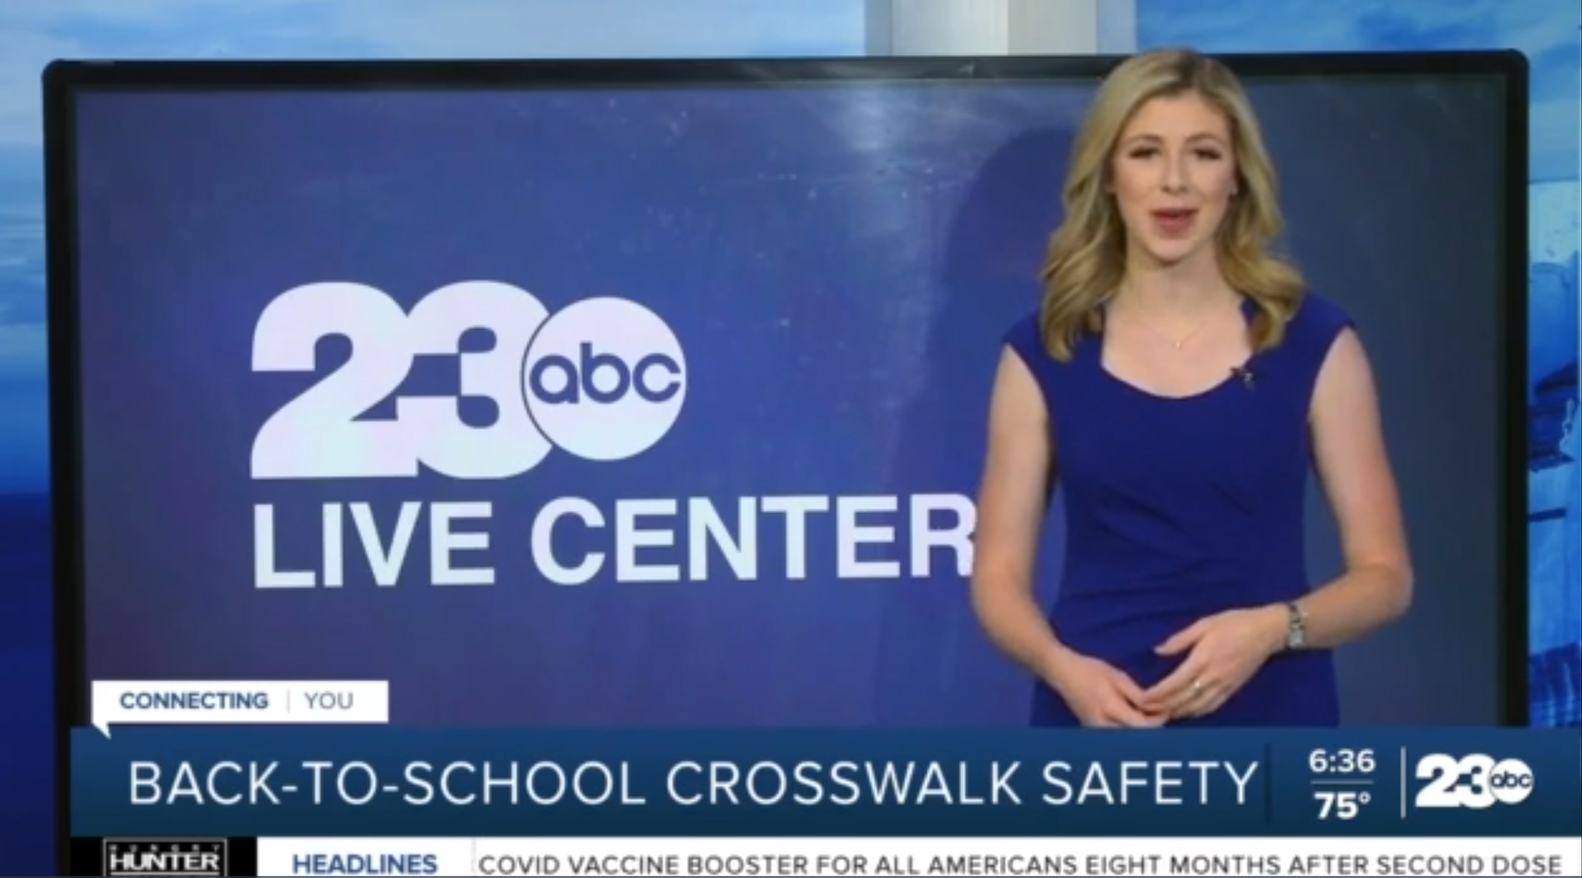 Back-to-school crosswalk safety tips